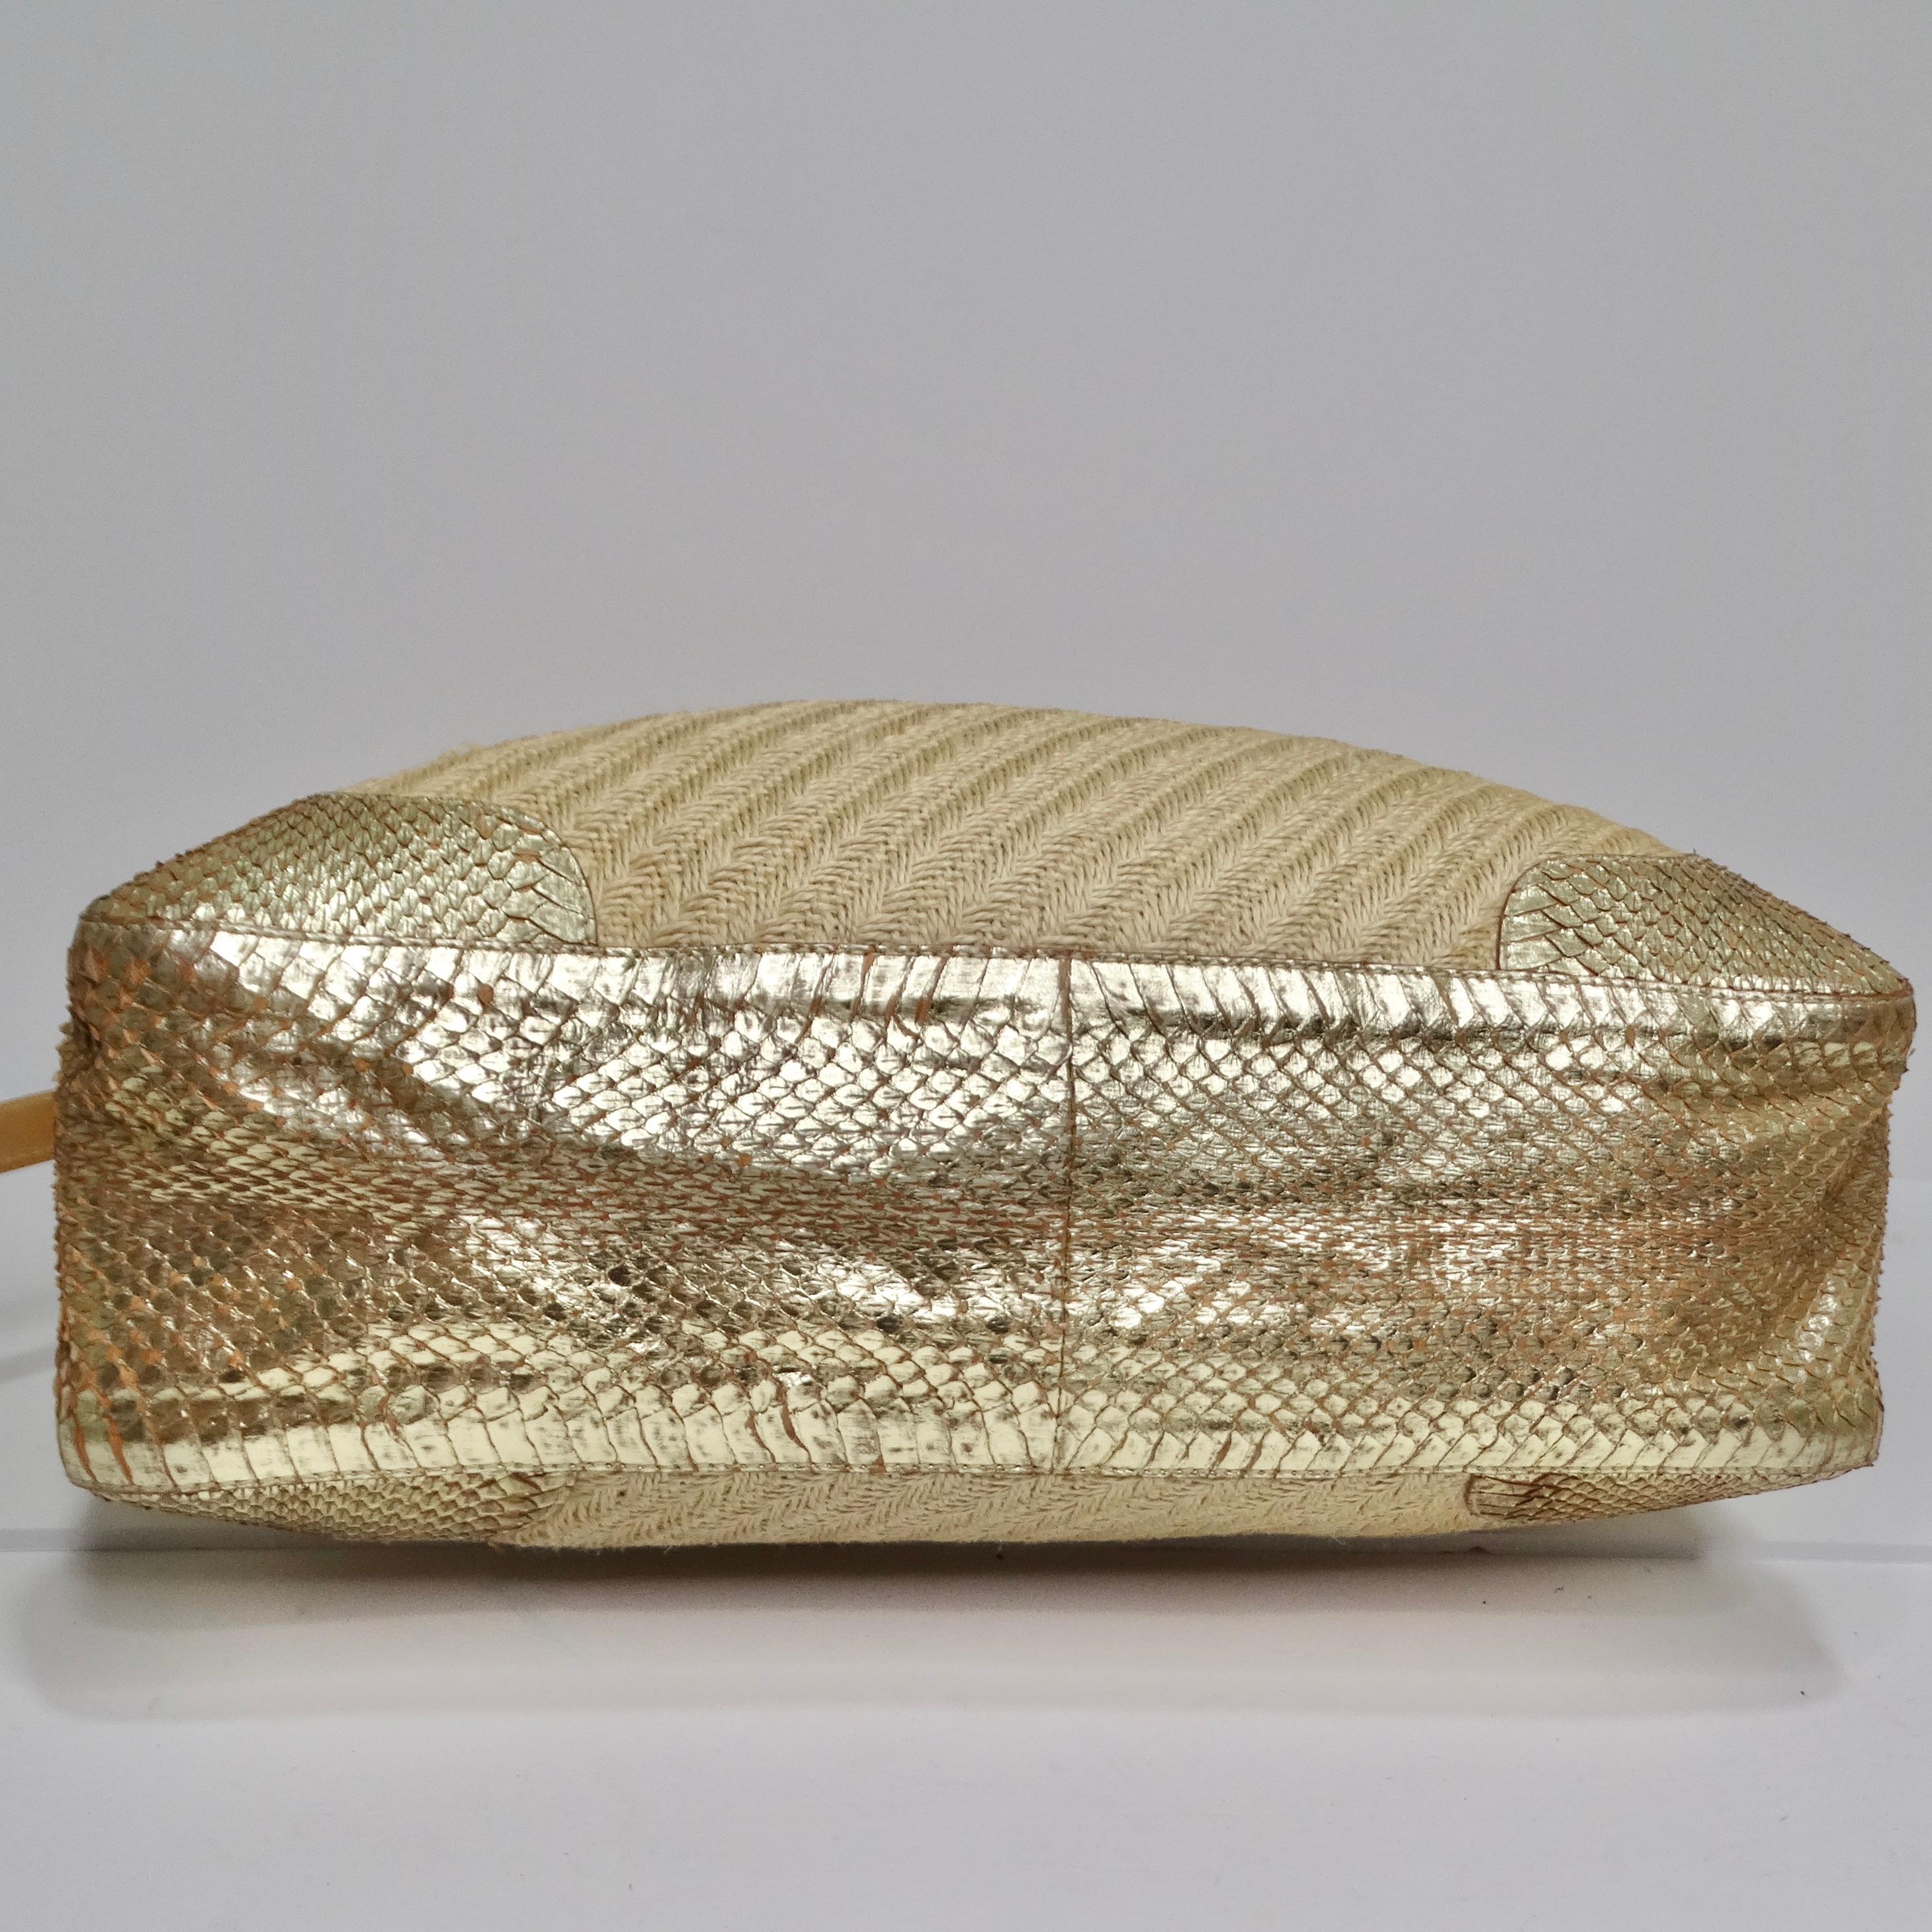 Prada Raffia Woven Jute & Gold Python-Trimmed Shoulder Bag In Excellent Condition For Sale In Scottsdale, AZ